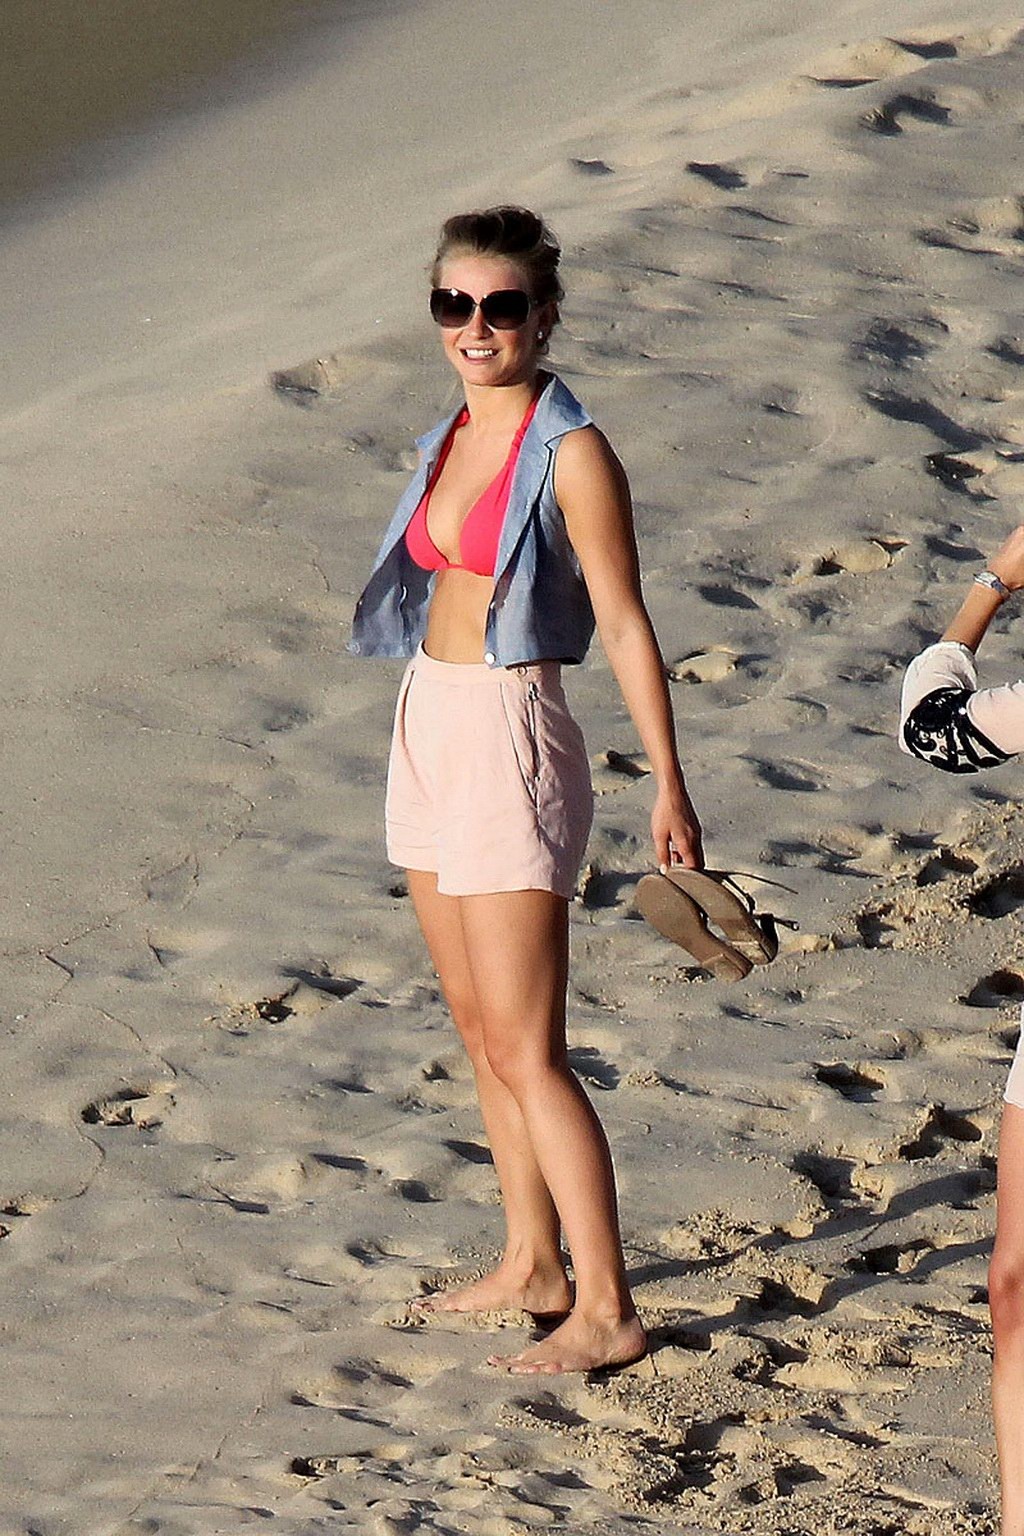 Julianne Hough wearing sexy red bikini on a beach in St. Barts #75276883